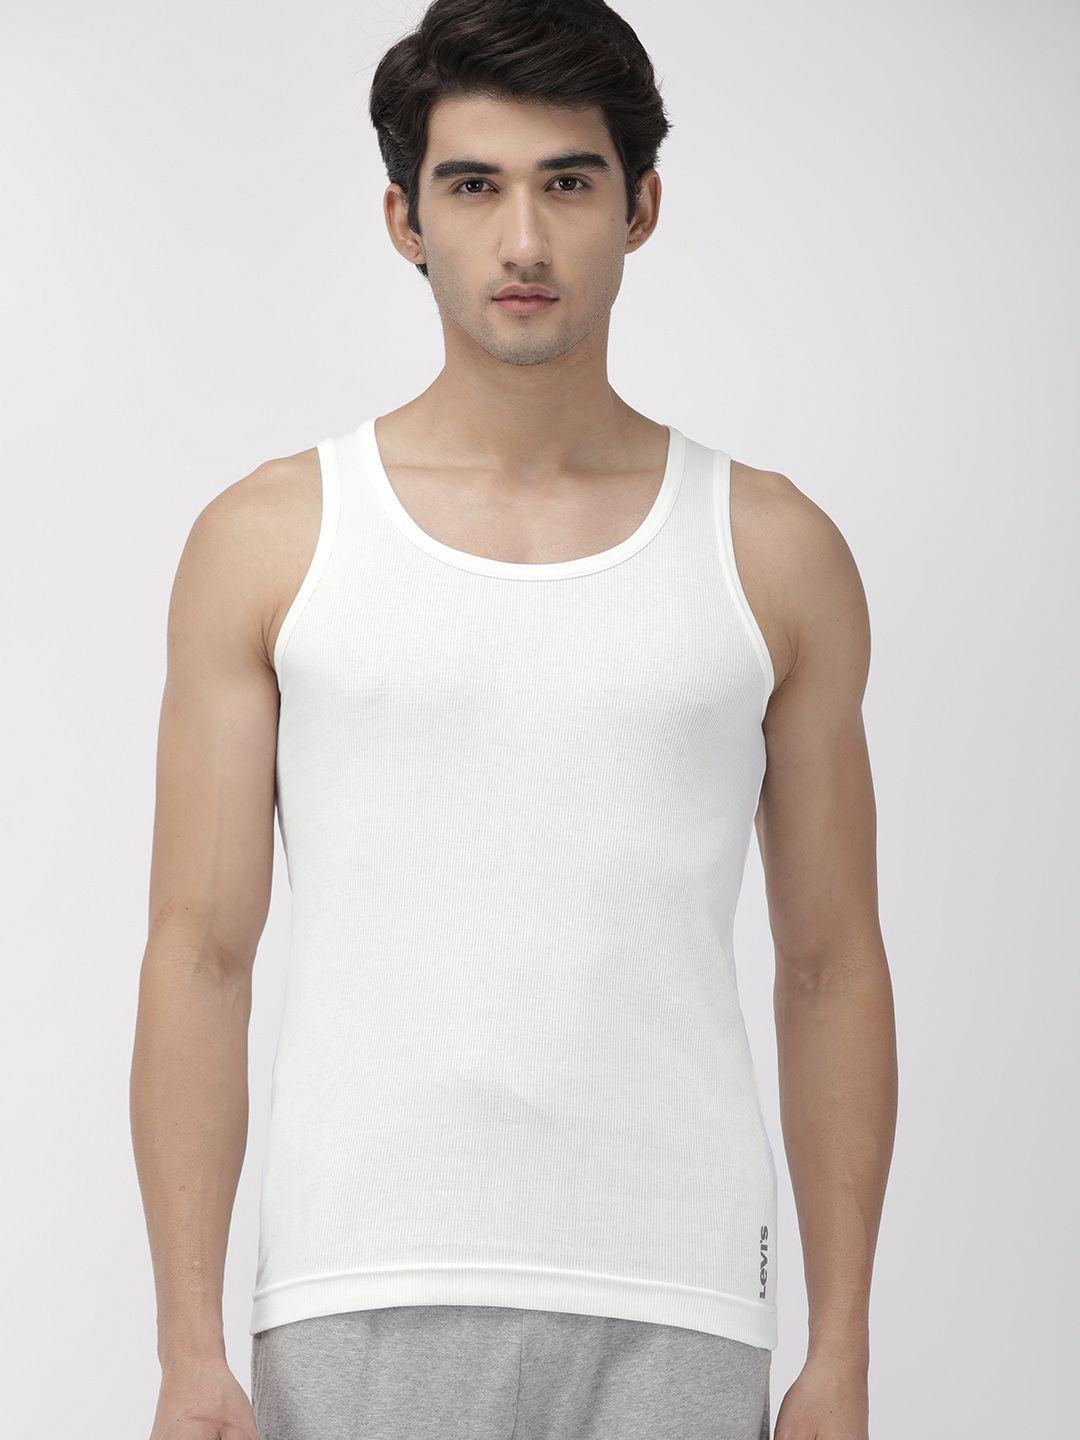 levis-men-smartskin-technology-cotton-rib-vest-with-tag-free-comfort-#013